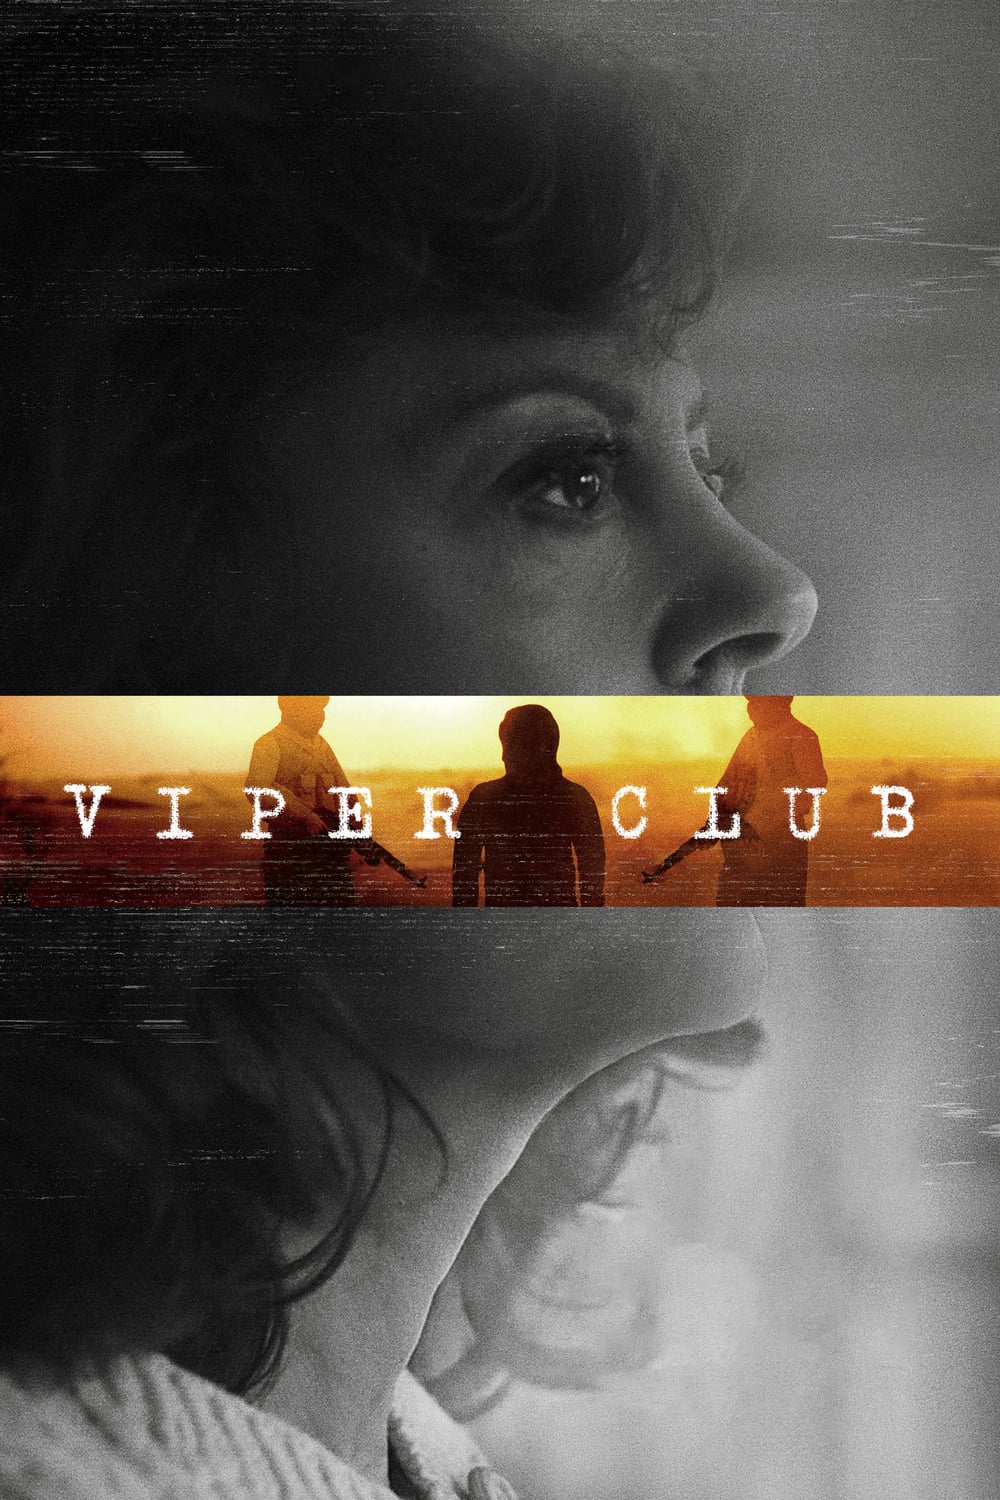 Viper Club (2018) Official Trailer #1